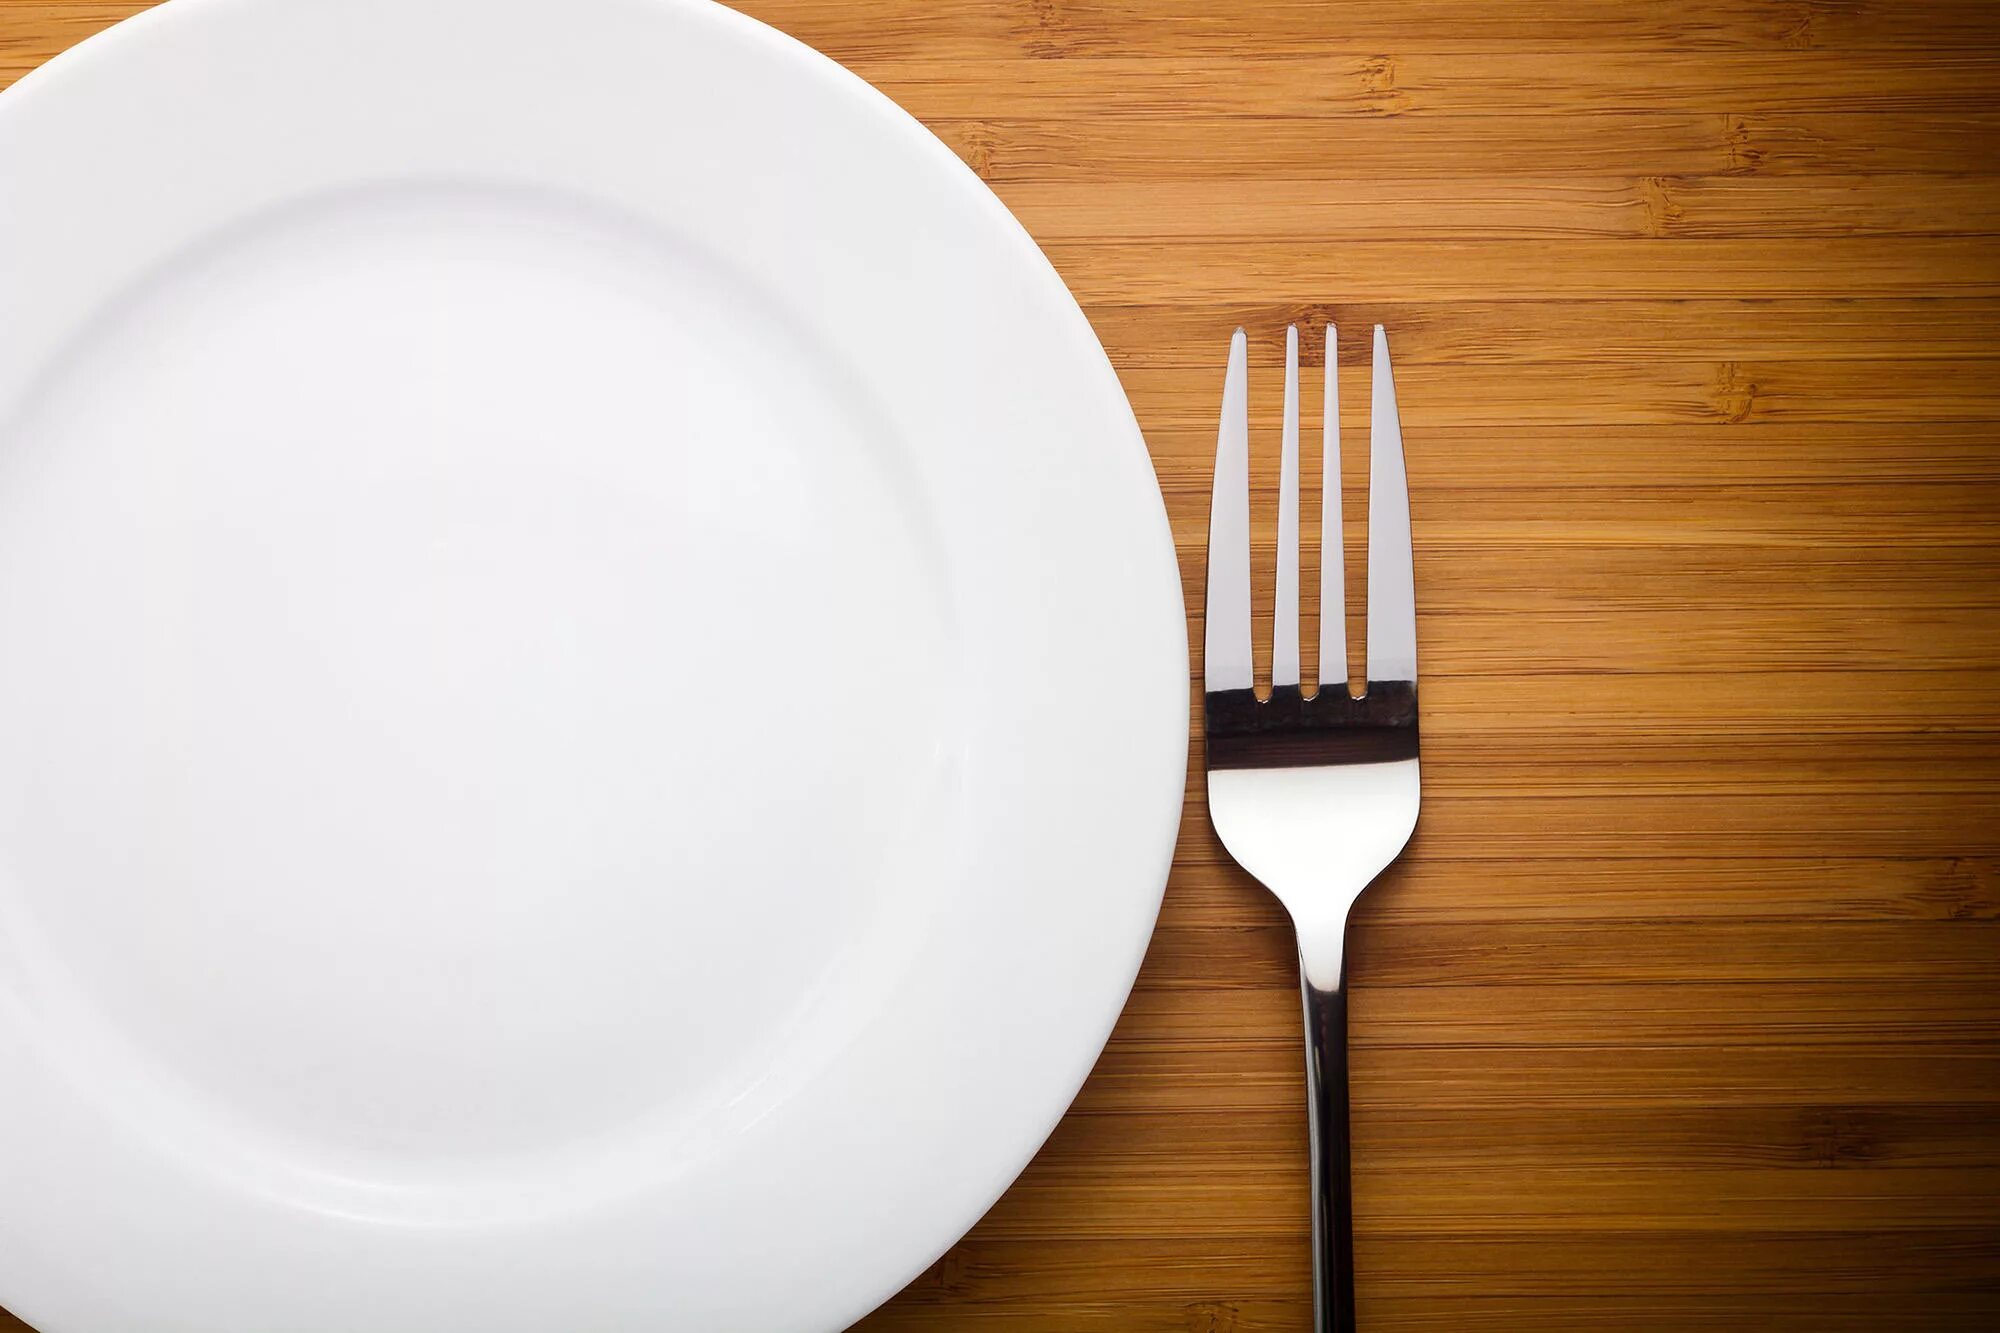 Лишняя тарелка на столе. Пустая тарелка на столе. Тарелка вид сверху. Пустая тарелка вид сверху. Тарелка на столе.